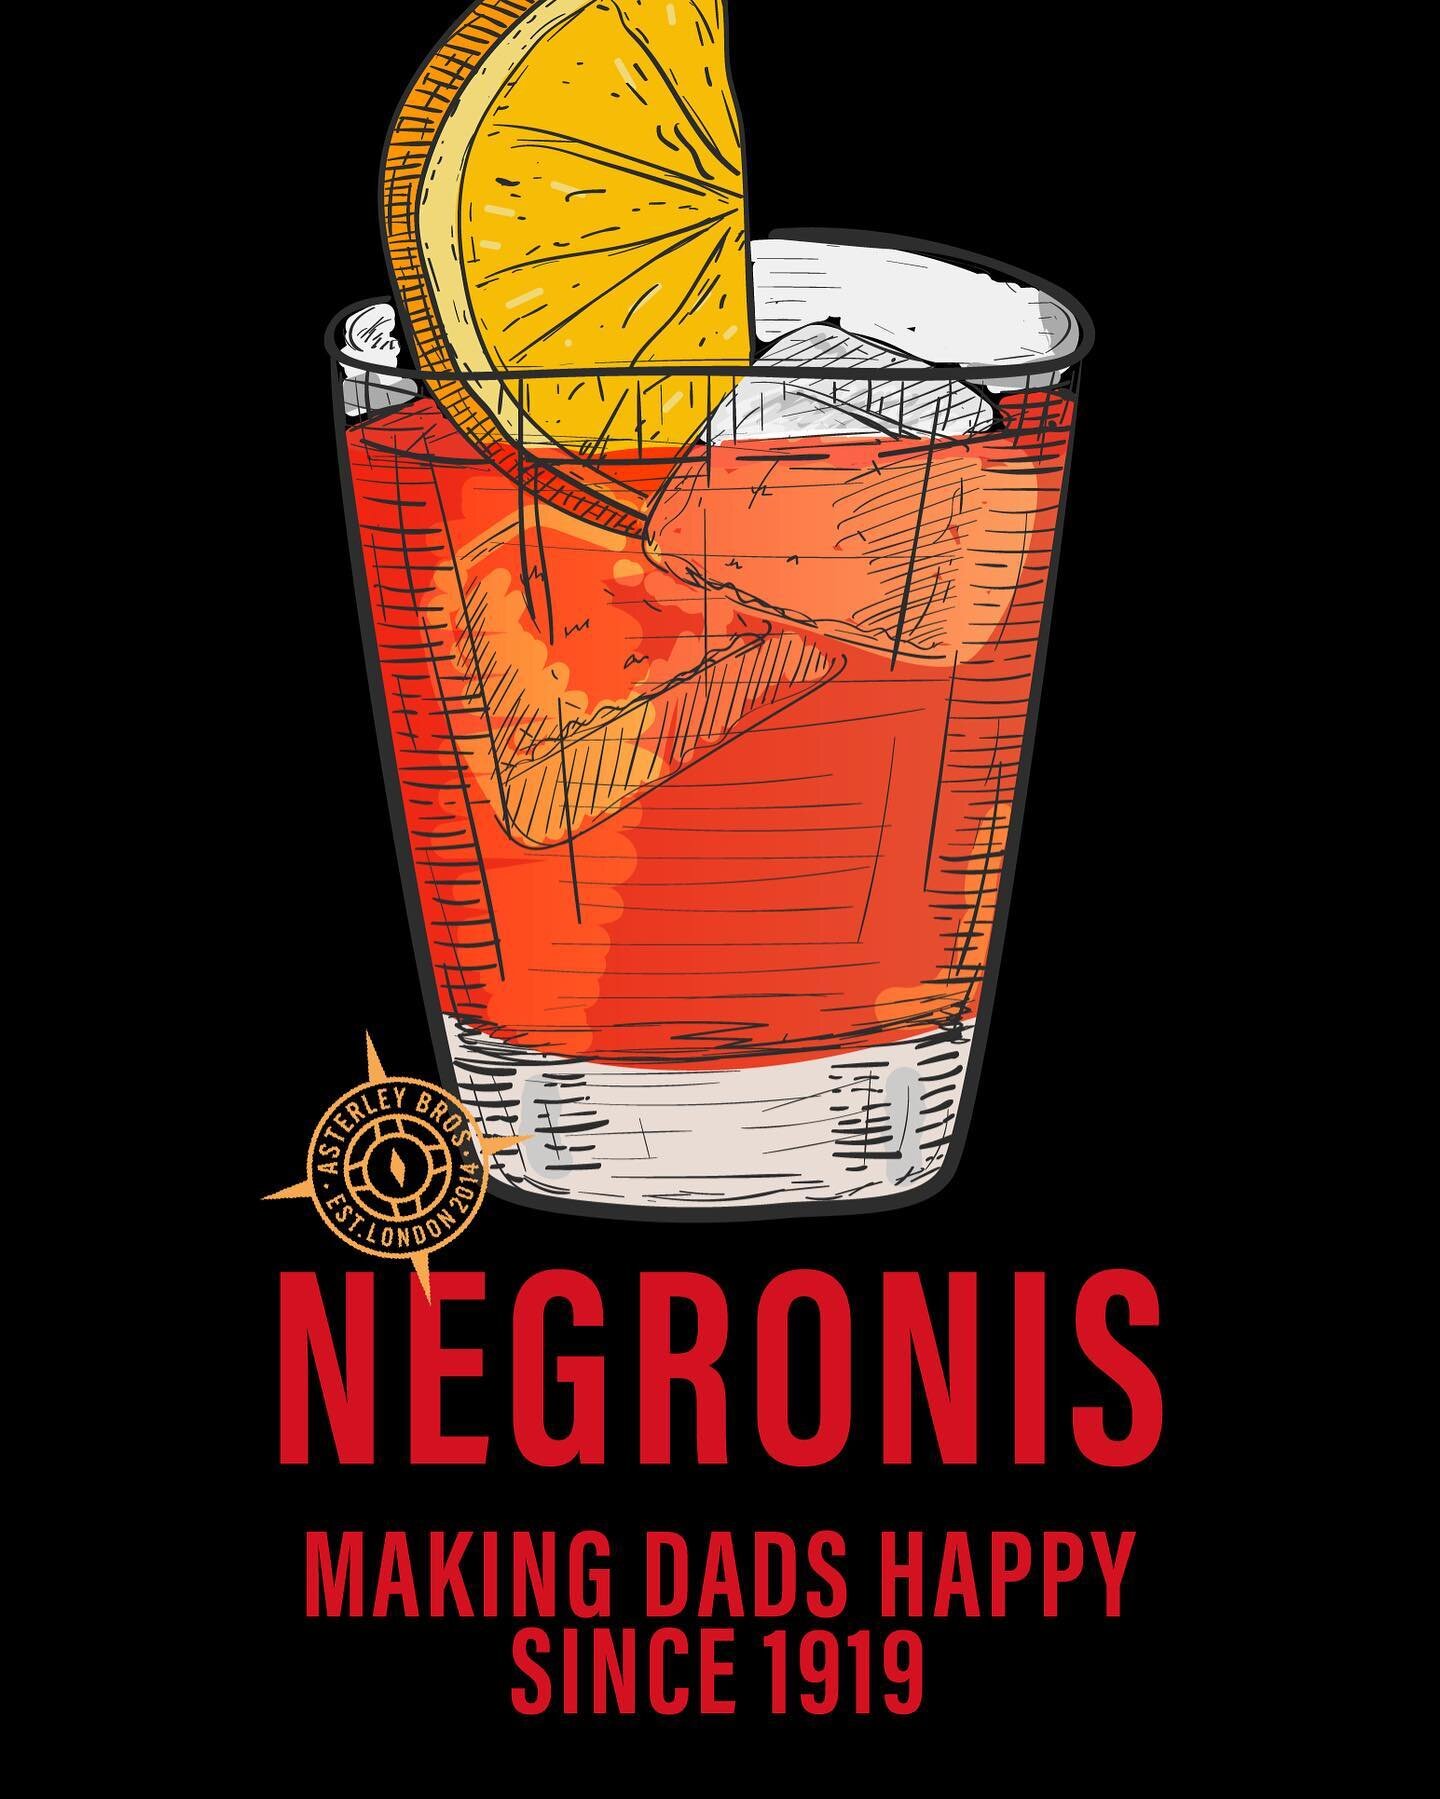 TOP TIP FOR FATHERS DAY
-
Negronis. IYKYK. 
-
.
.
.
#thenegronisociety

#lovenegronis
#negronilovers
#campari
#bartending
#cocktailsporn
#handmadespirits
#cocktailstime
#craftdrinks
#amaro
#cocktailkitchen
#botanicalspirit
#bittercocktails
#cocktails